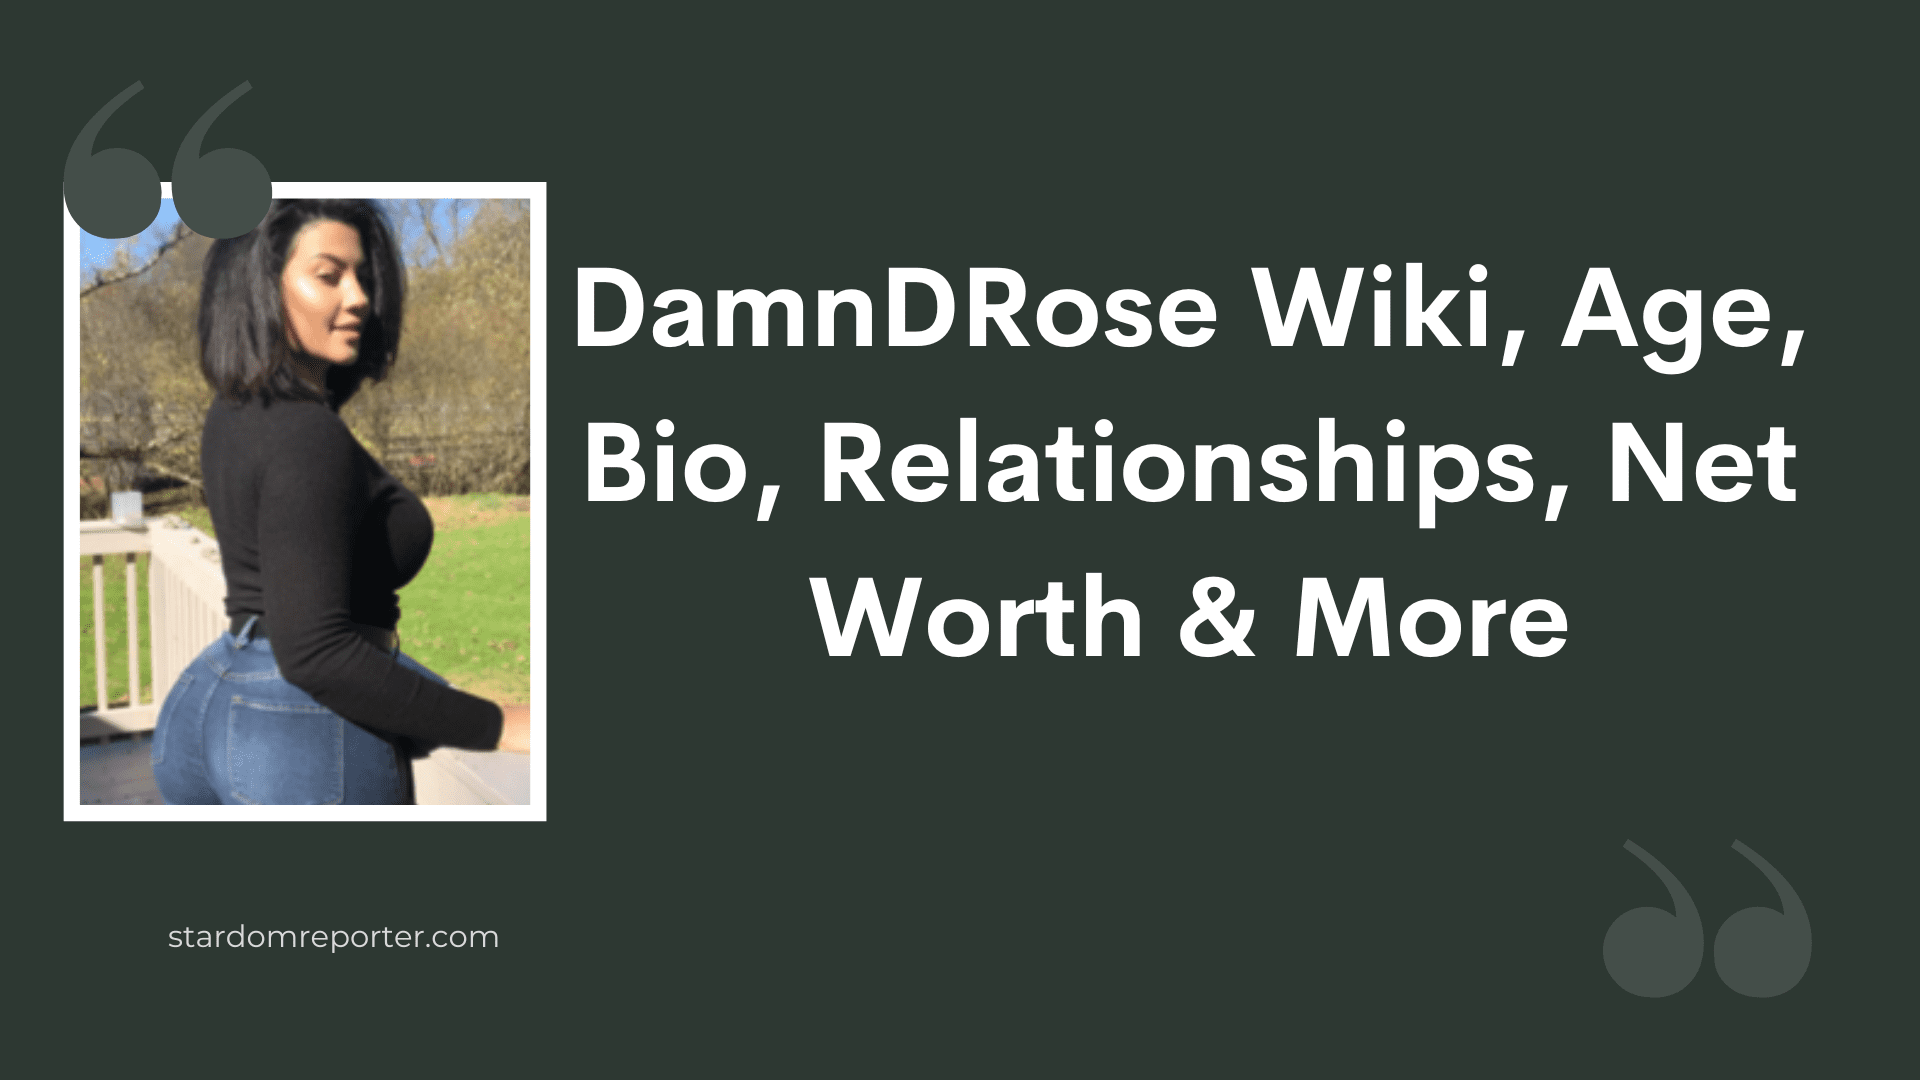 DamnDRose Wiki, Age, Bio, Husband, Net Worth & More - 51